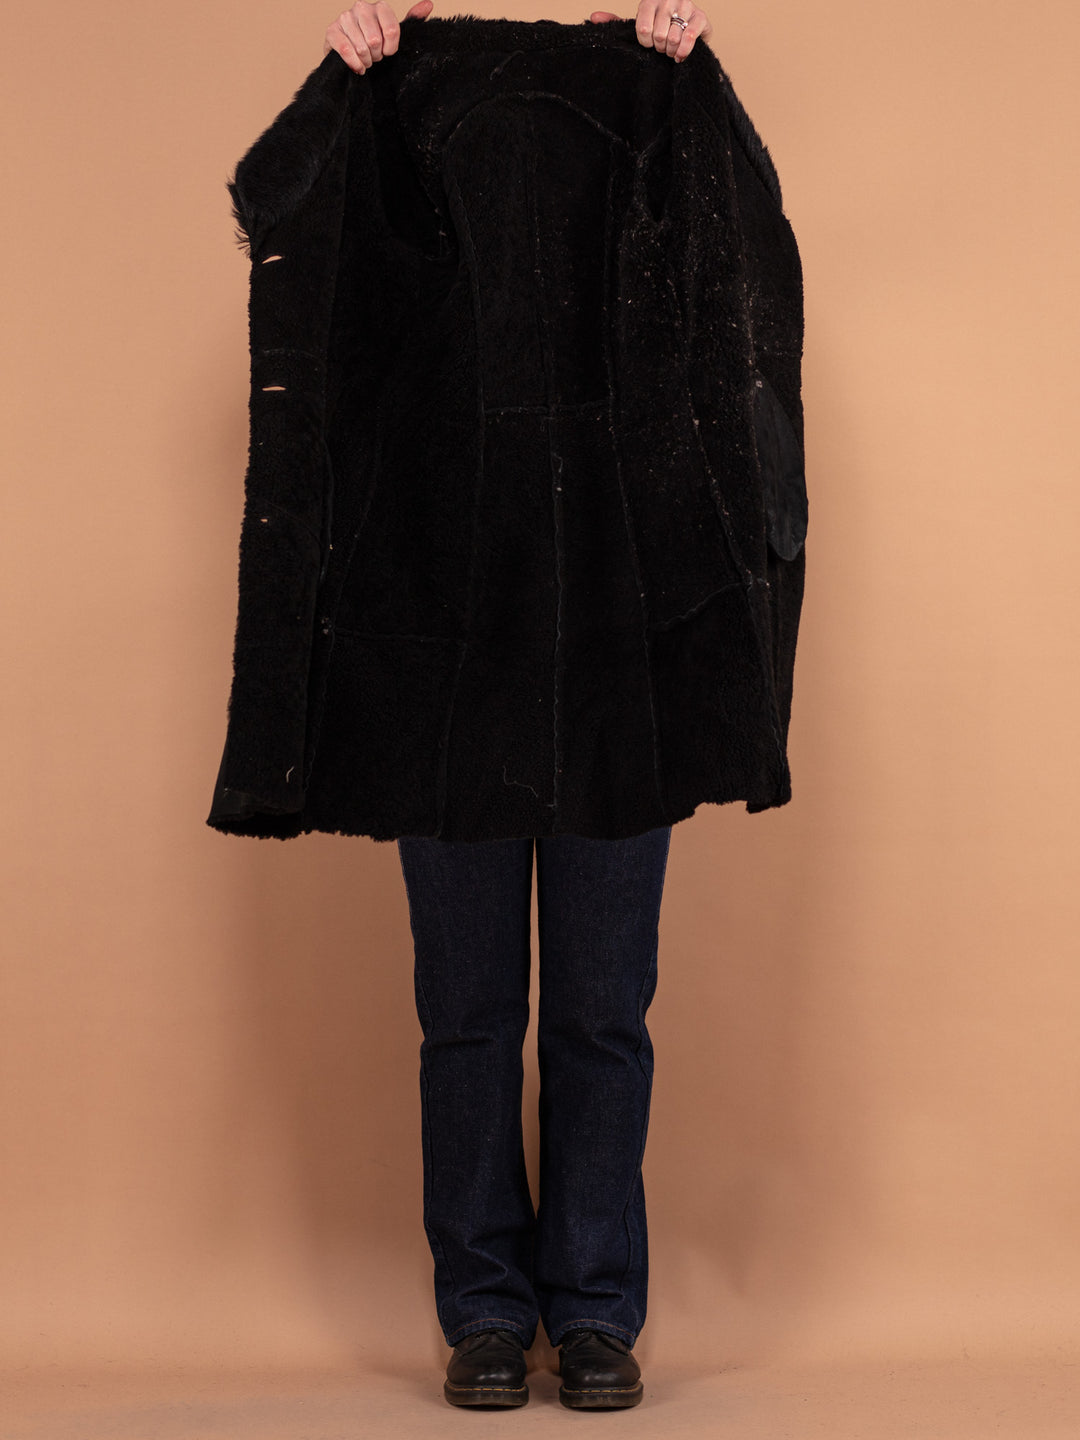 Black Sheepskin Fur Coat 90s, Size Small, Women Black Suede Overcoat, Double Breasted Classy Coat, Vintage Outerwear, Feminine Clothing